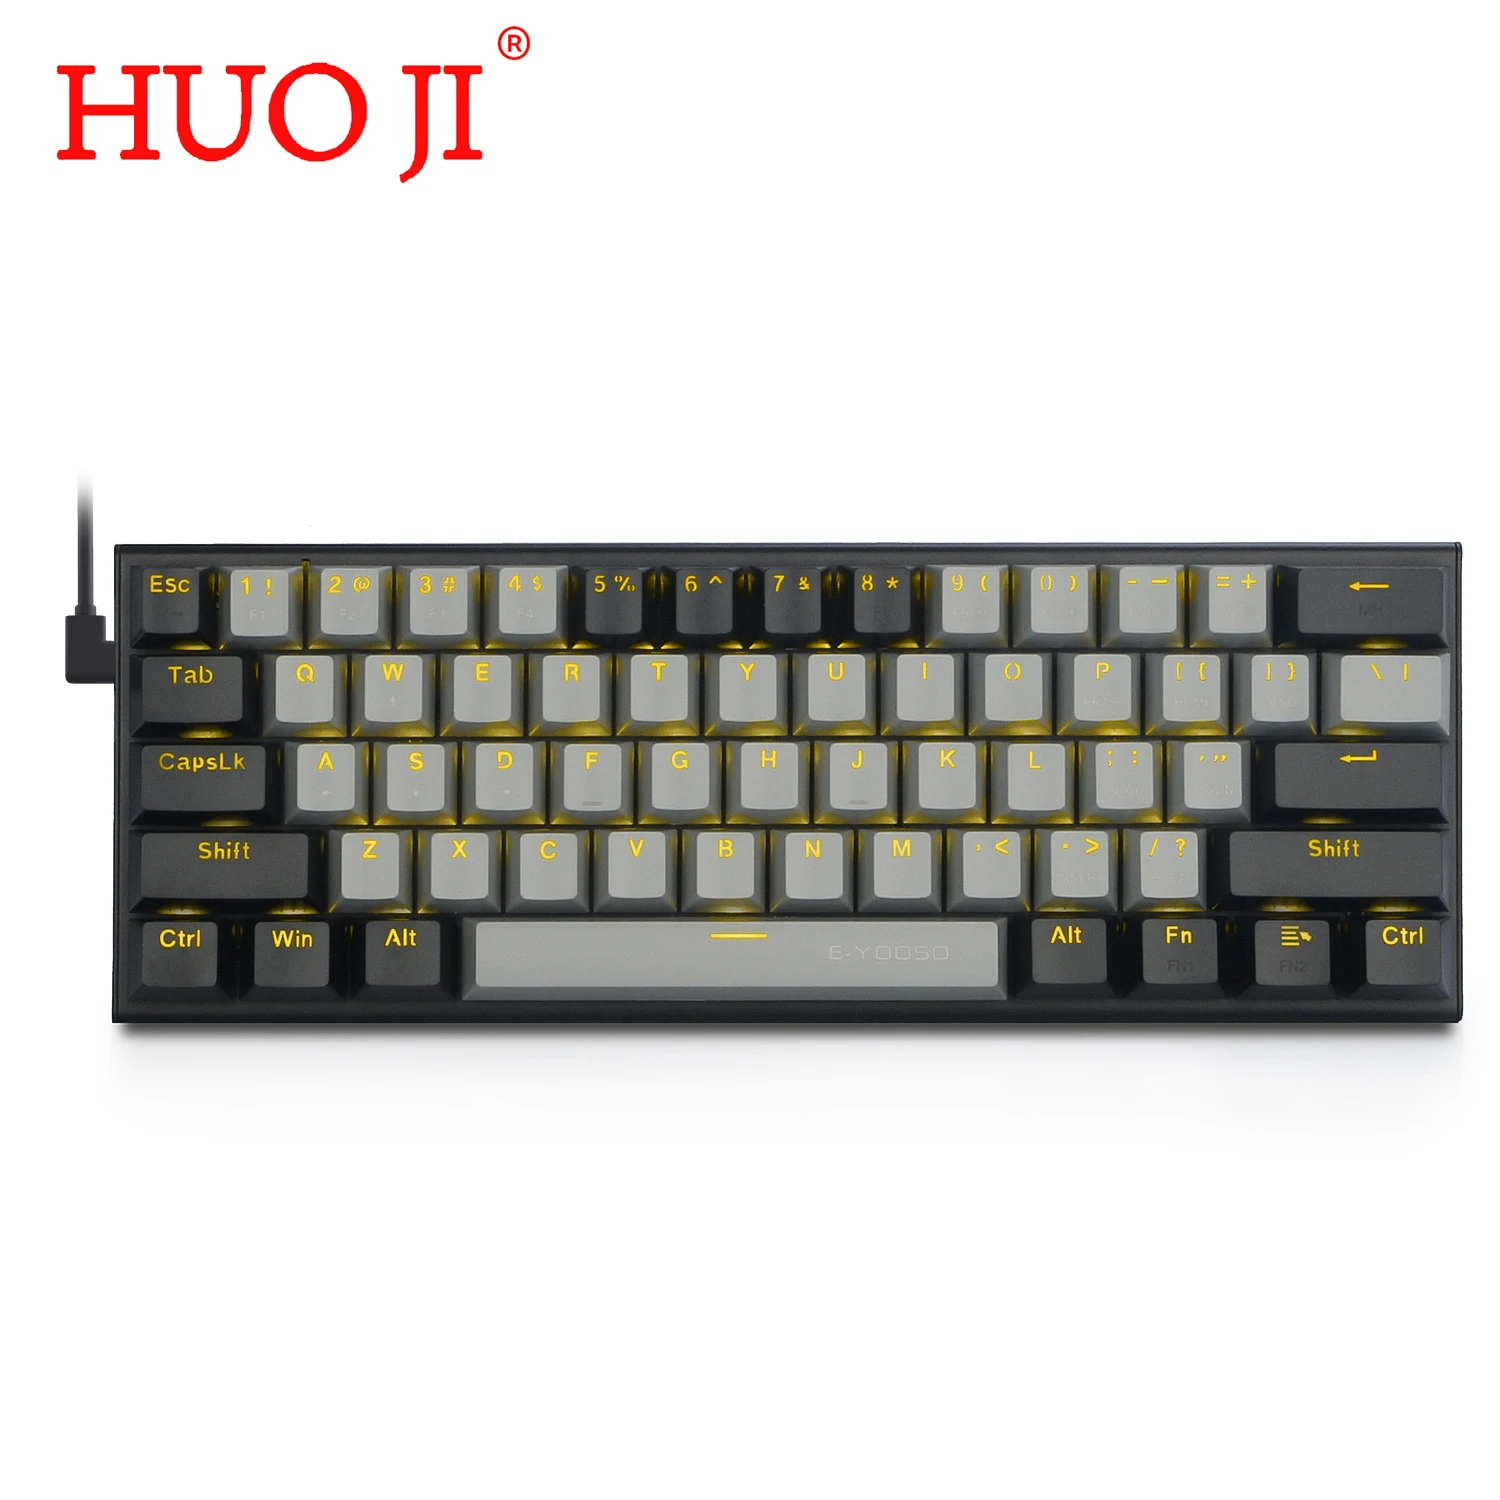 HUO JI E-YOOSO Z-11 60% Mechanical Keyboard USB Wired LED Ba